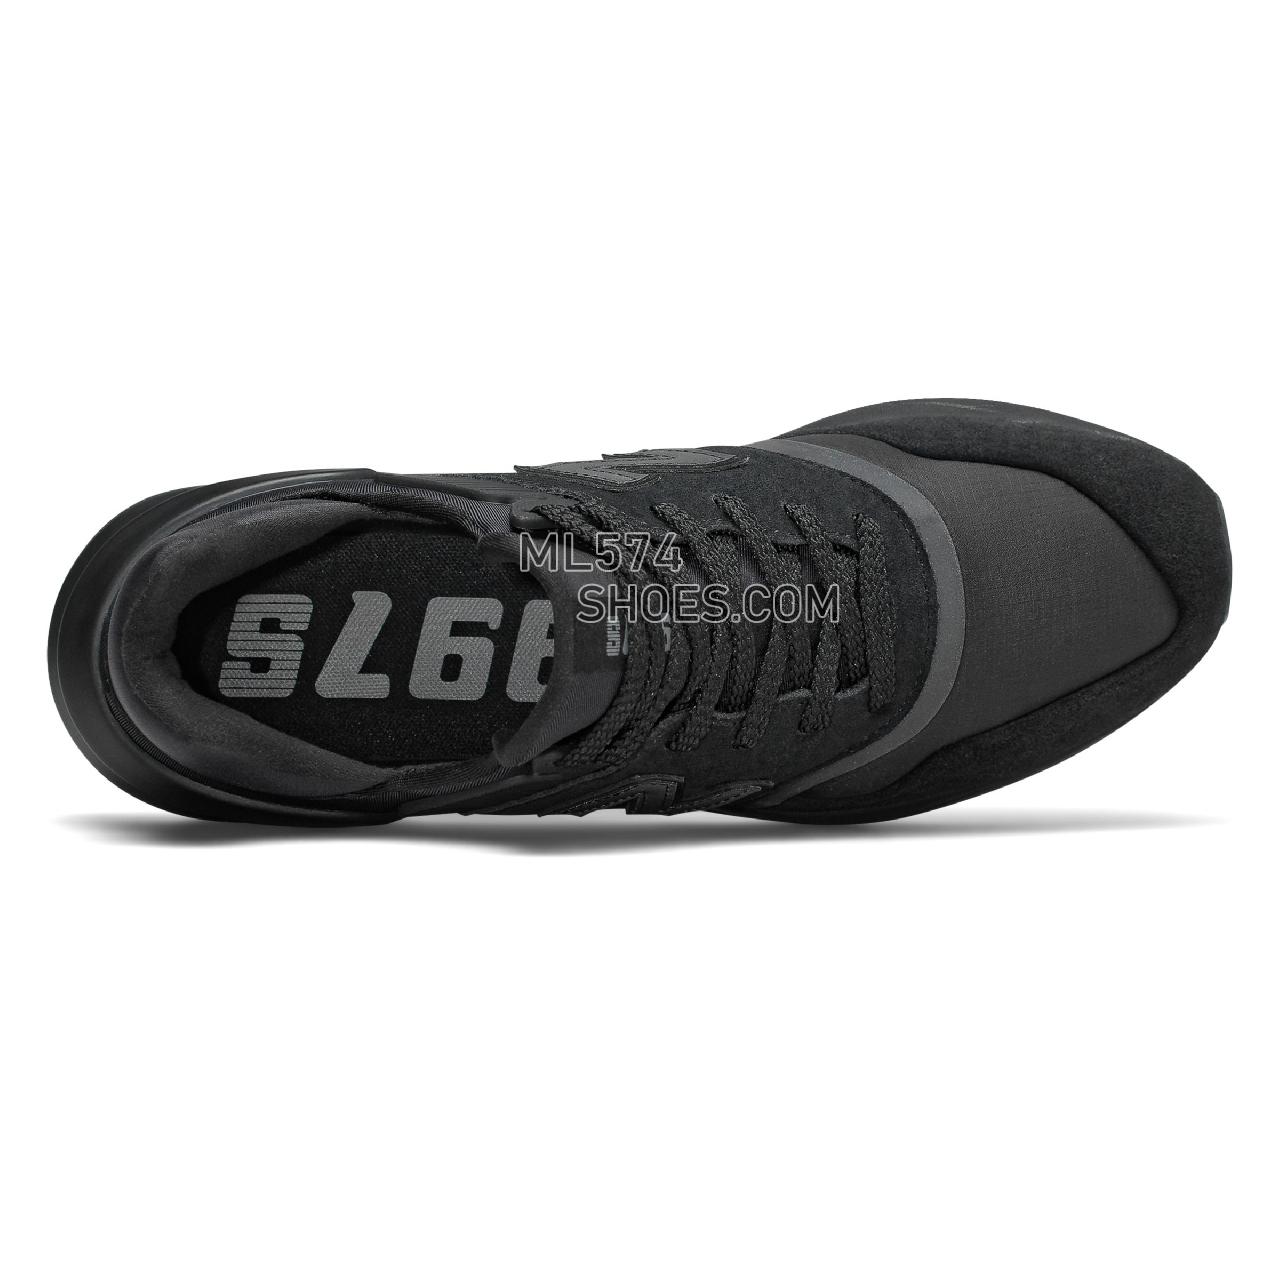 New Balance 997 Sport - Men's 997 Sport Classic MS997V1-27474-M - Black with Black Caviar - MS997MB